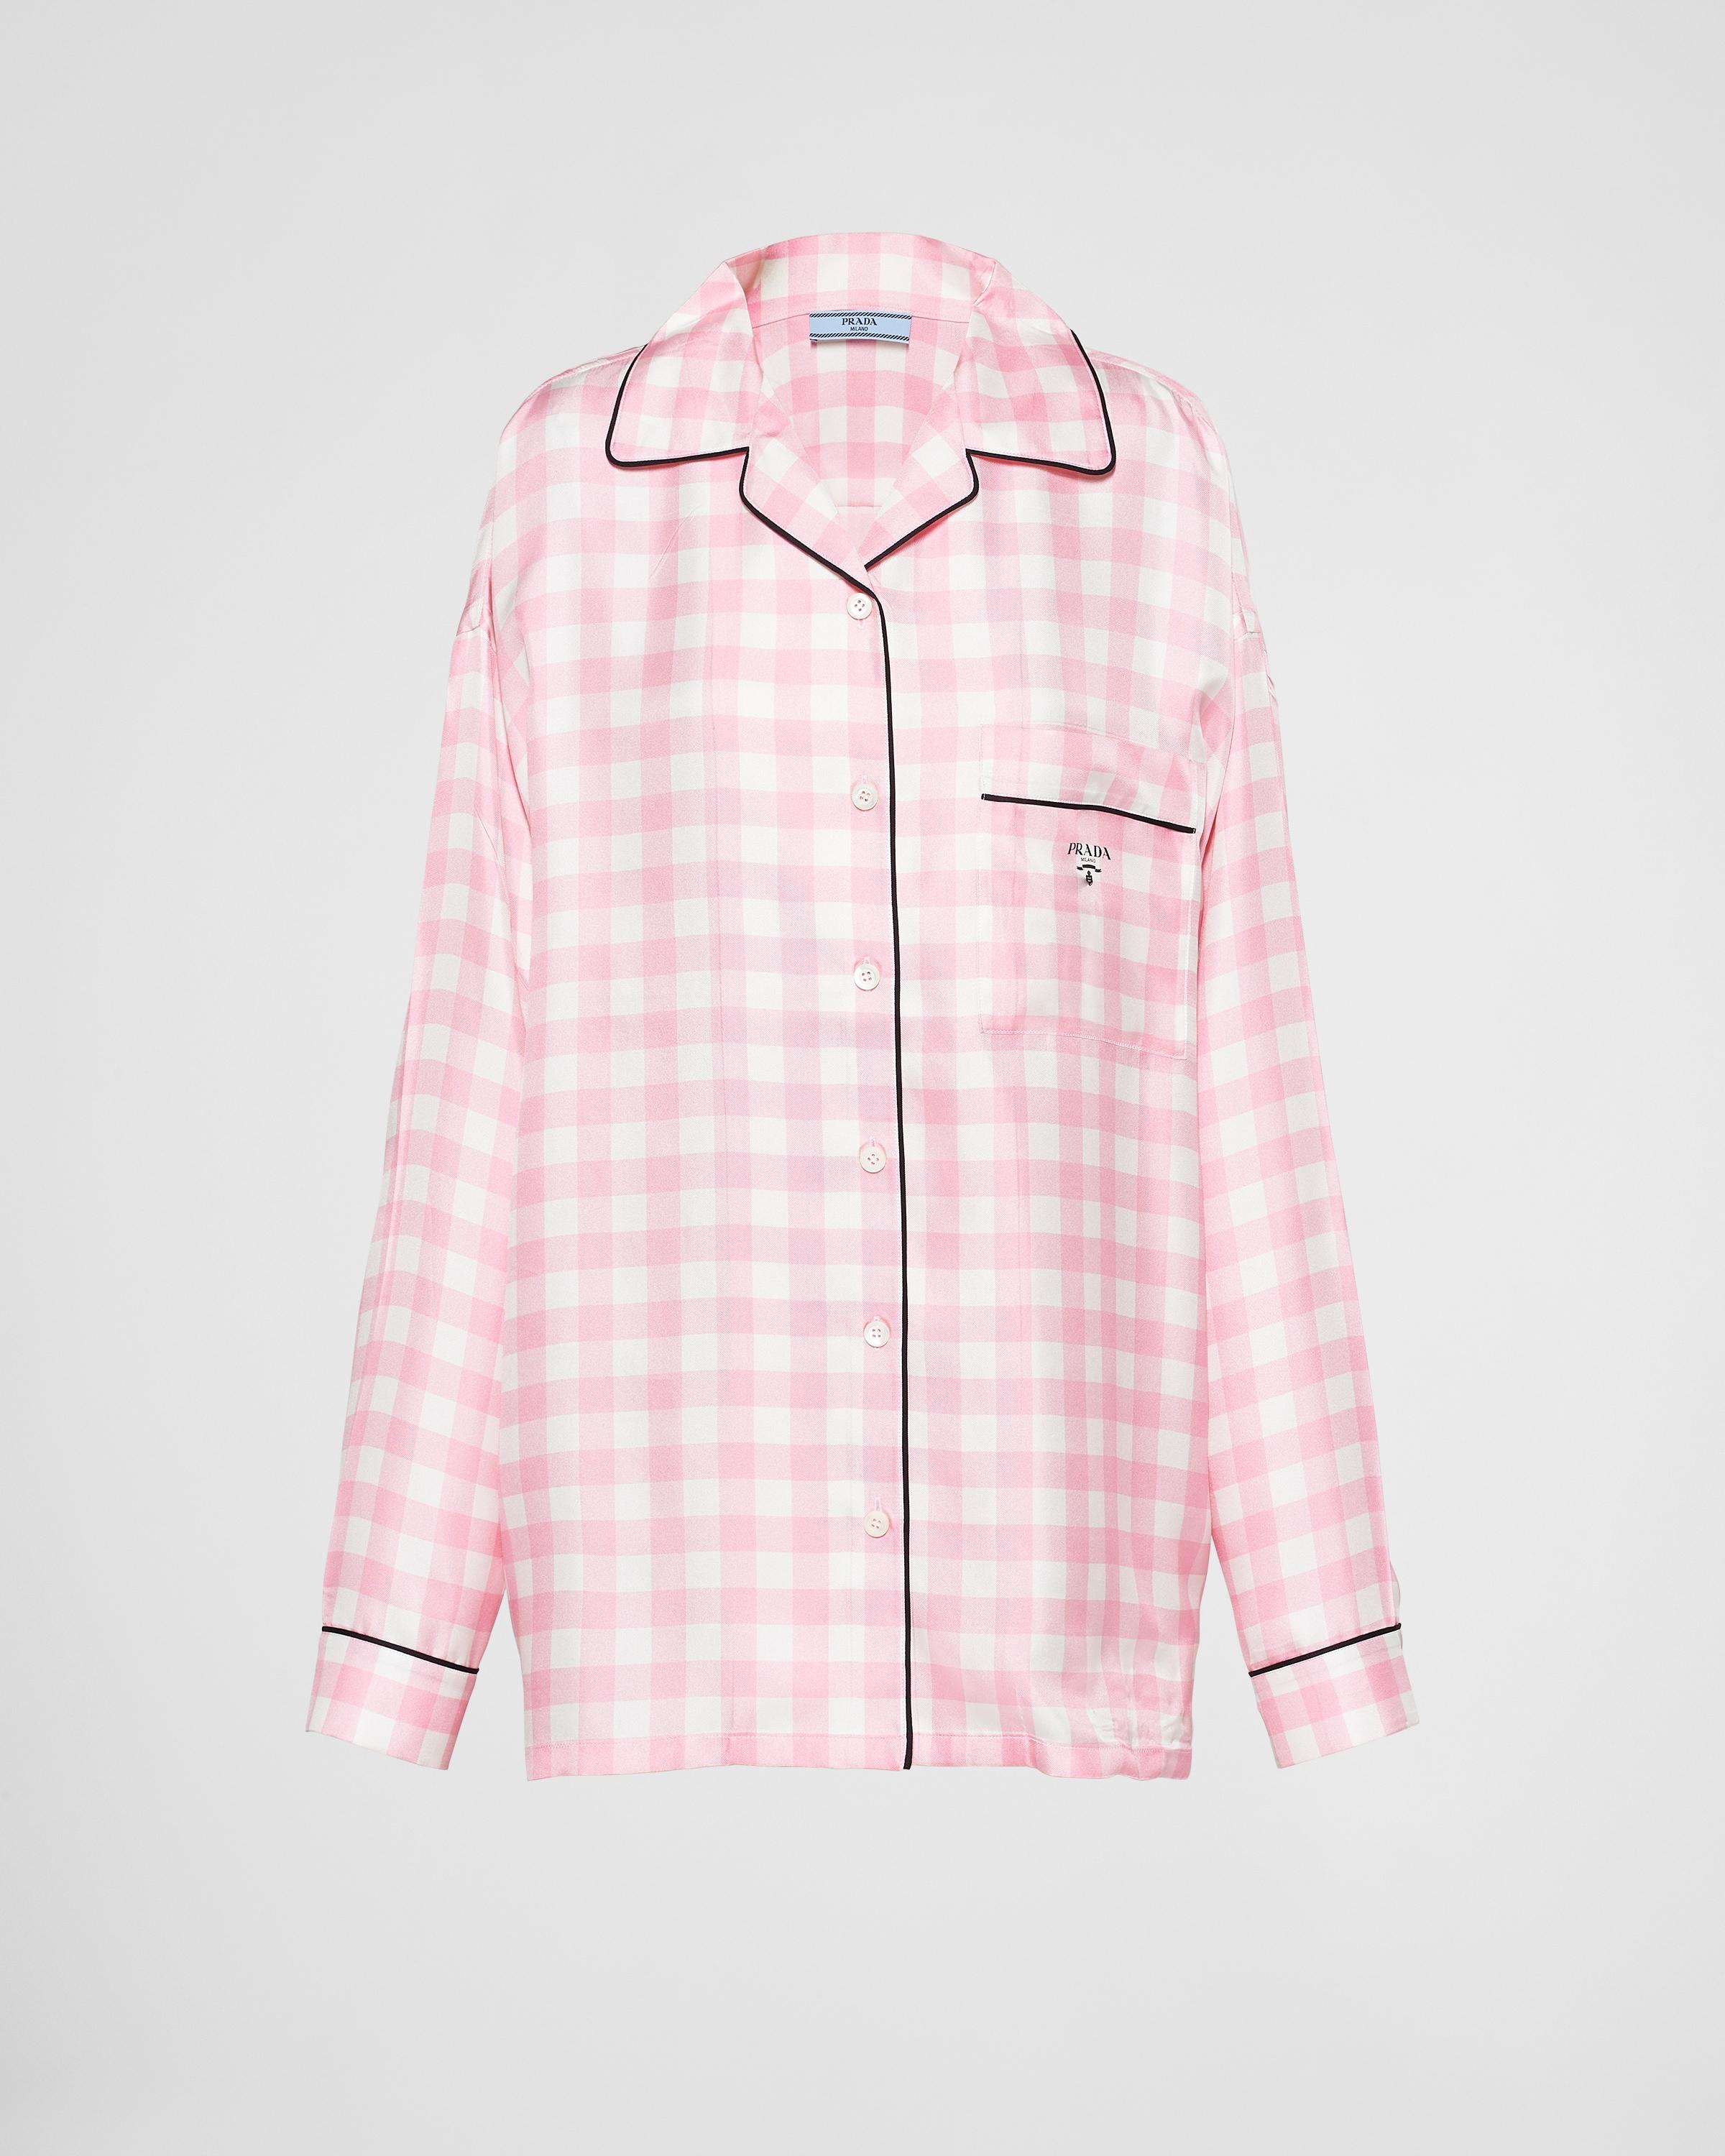 Prada Gingham Check Twill Shirt in Pink | Lyst